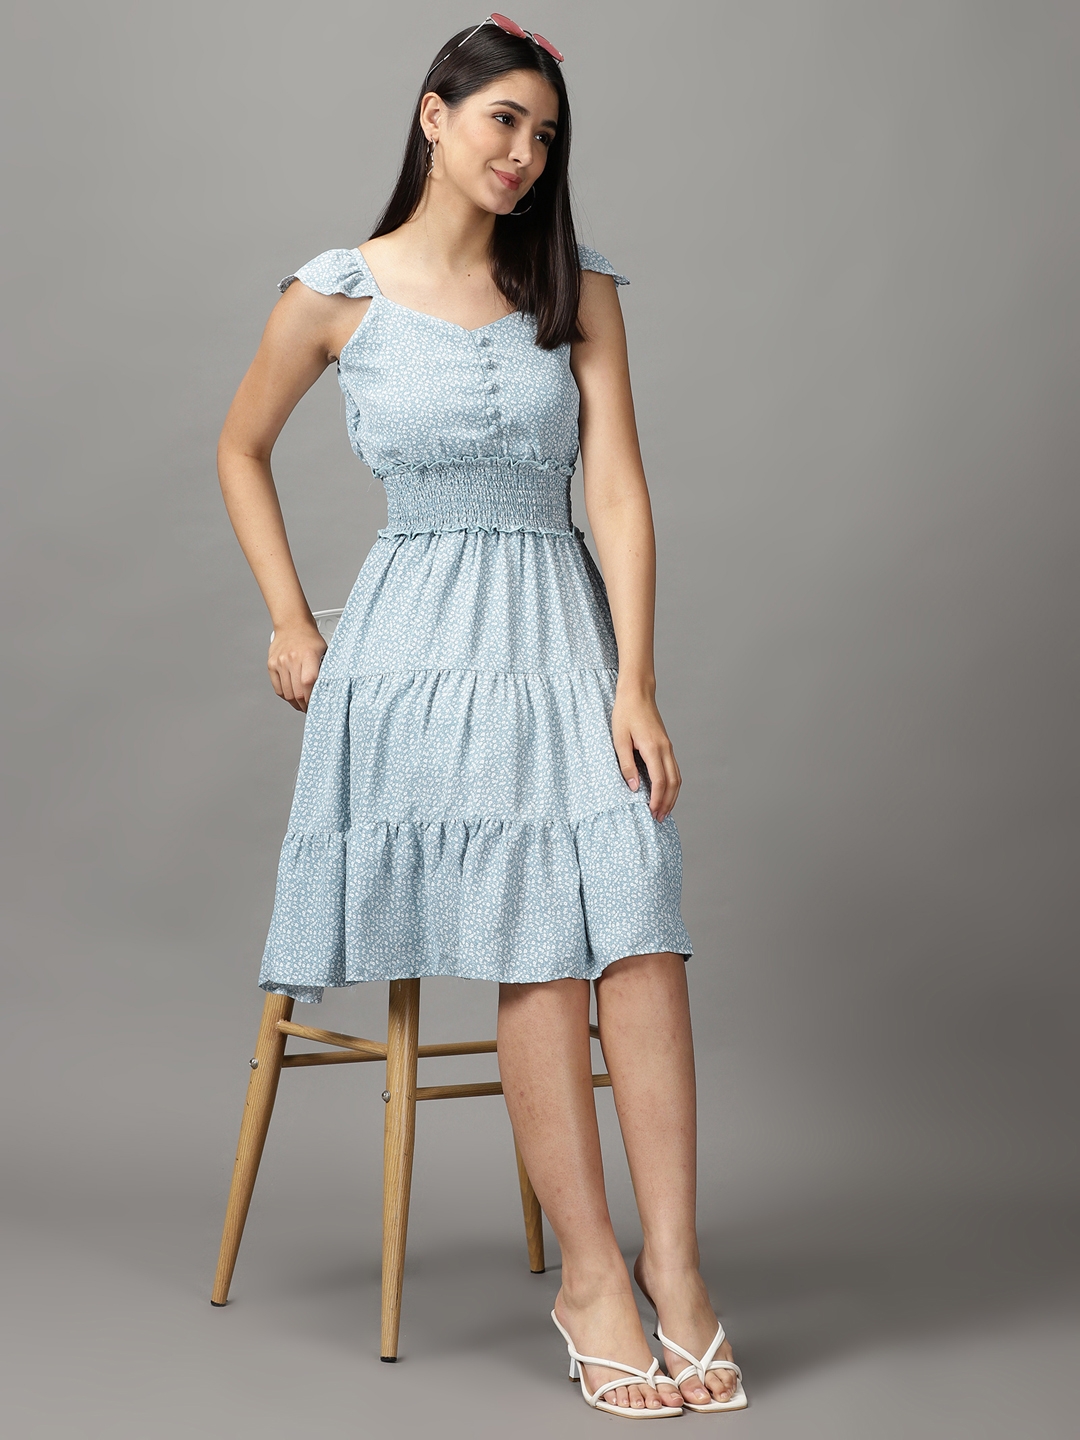 Showoff | SHOWOFF Women Blue Printed Shoulder Straps Sleeveless Above Knee Fit and Flare Dress 4